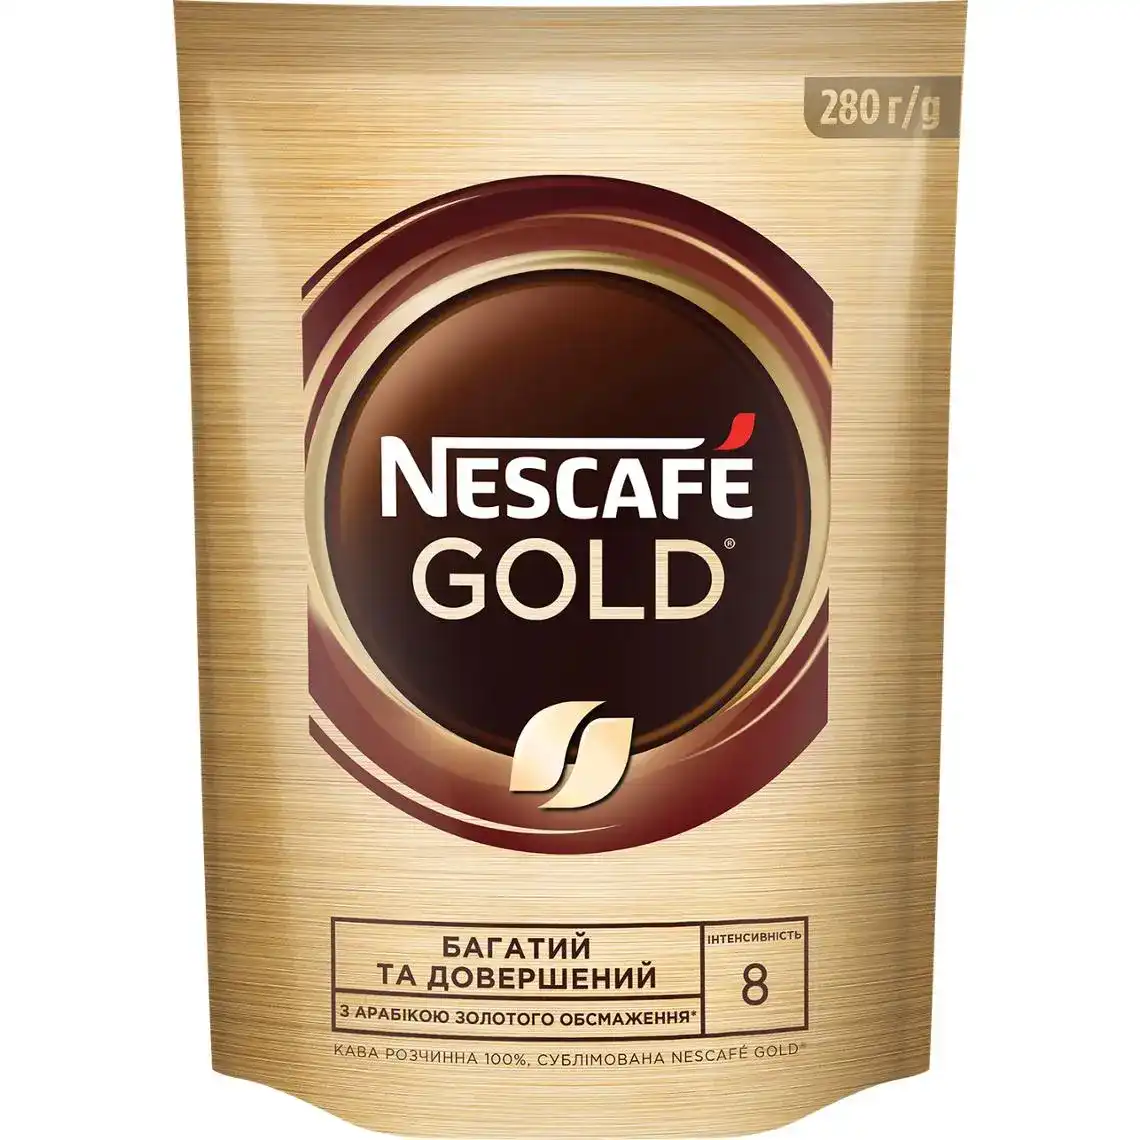 Кава розчинна сублімована Nescafe Gold 280 г